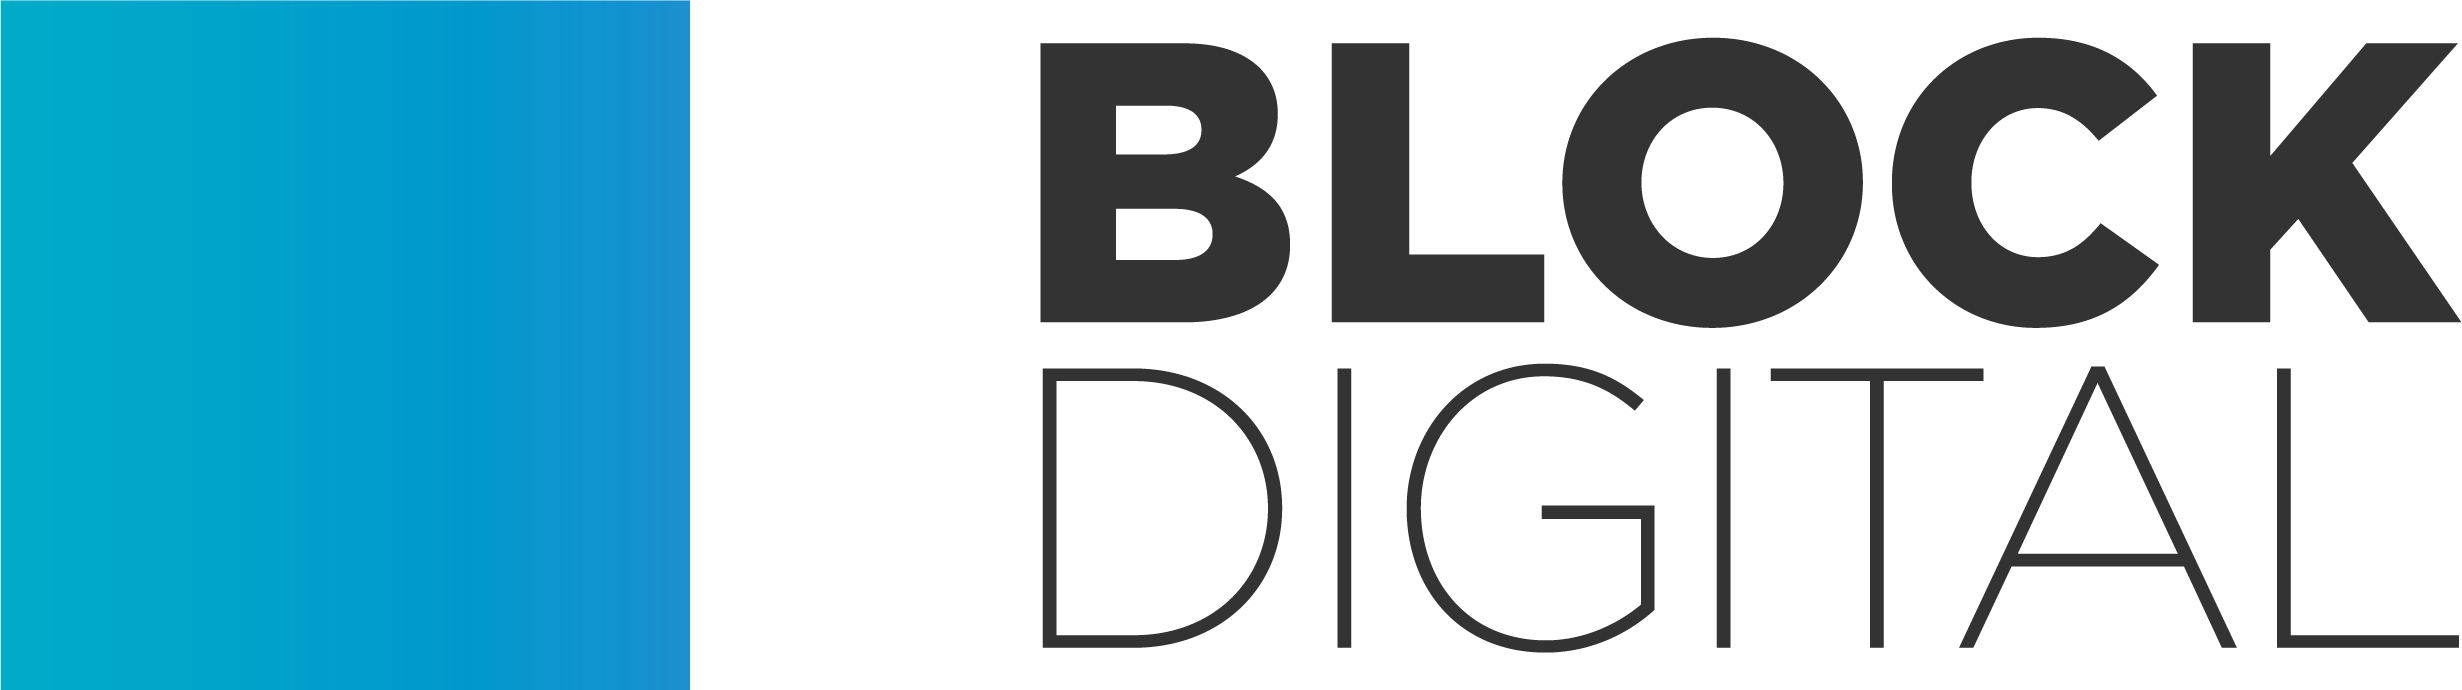 Block Digital | Shopify Partners & Experts